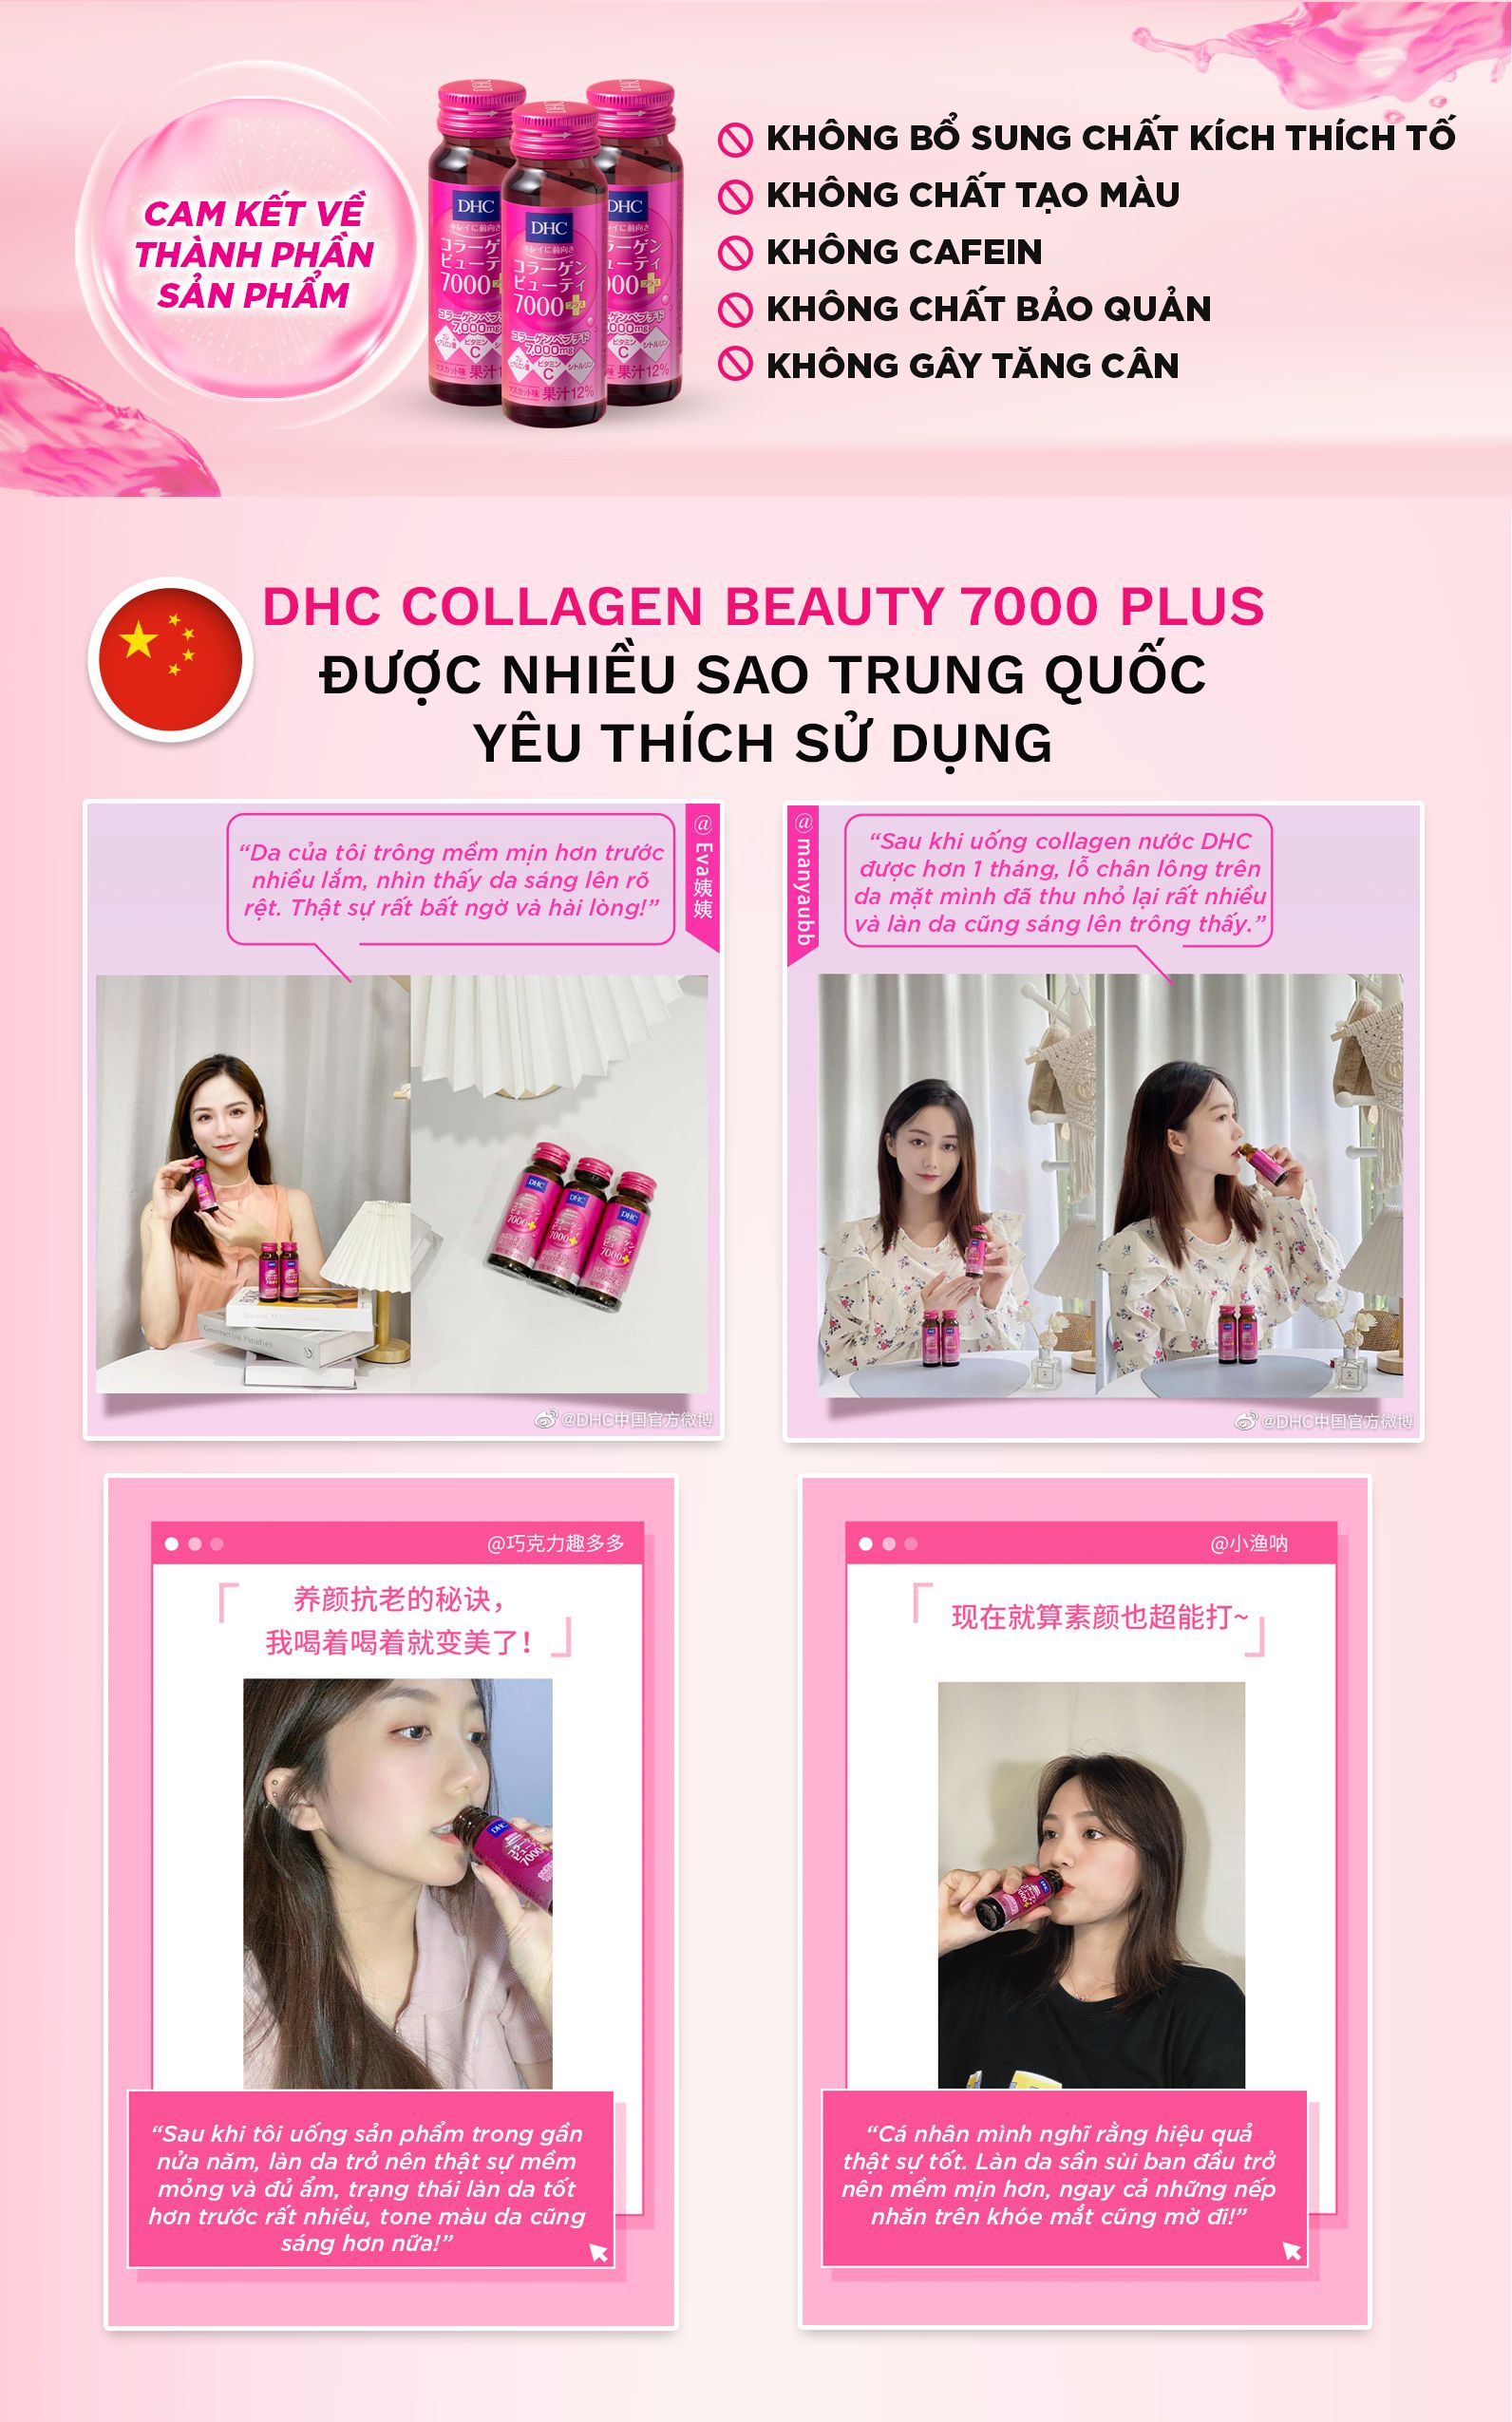 Review collagen nước DHC